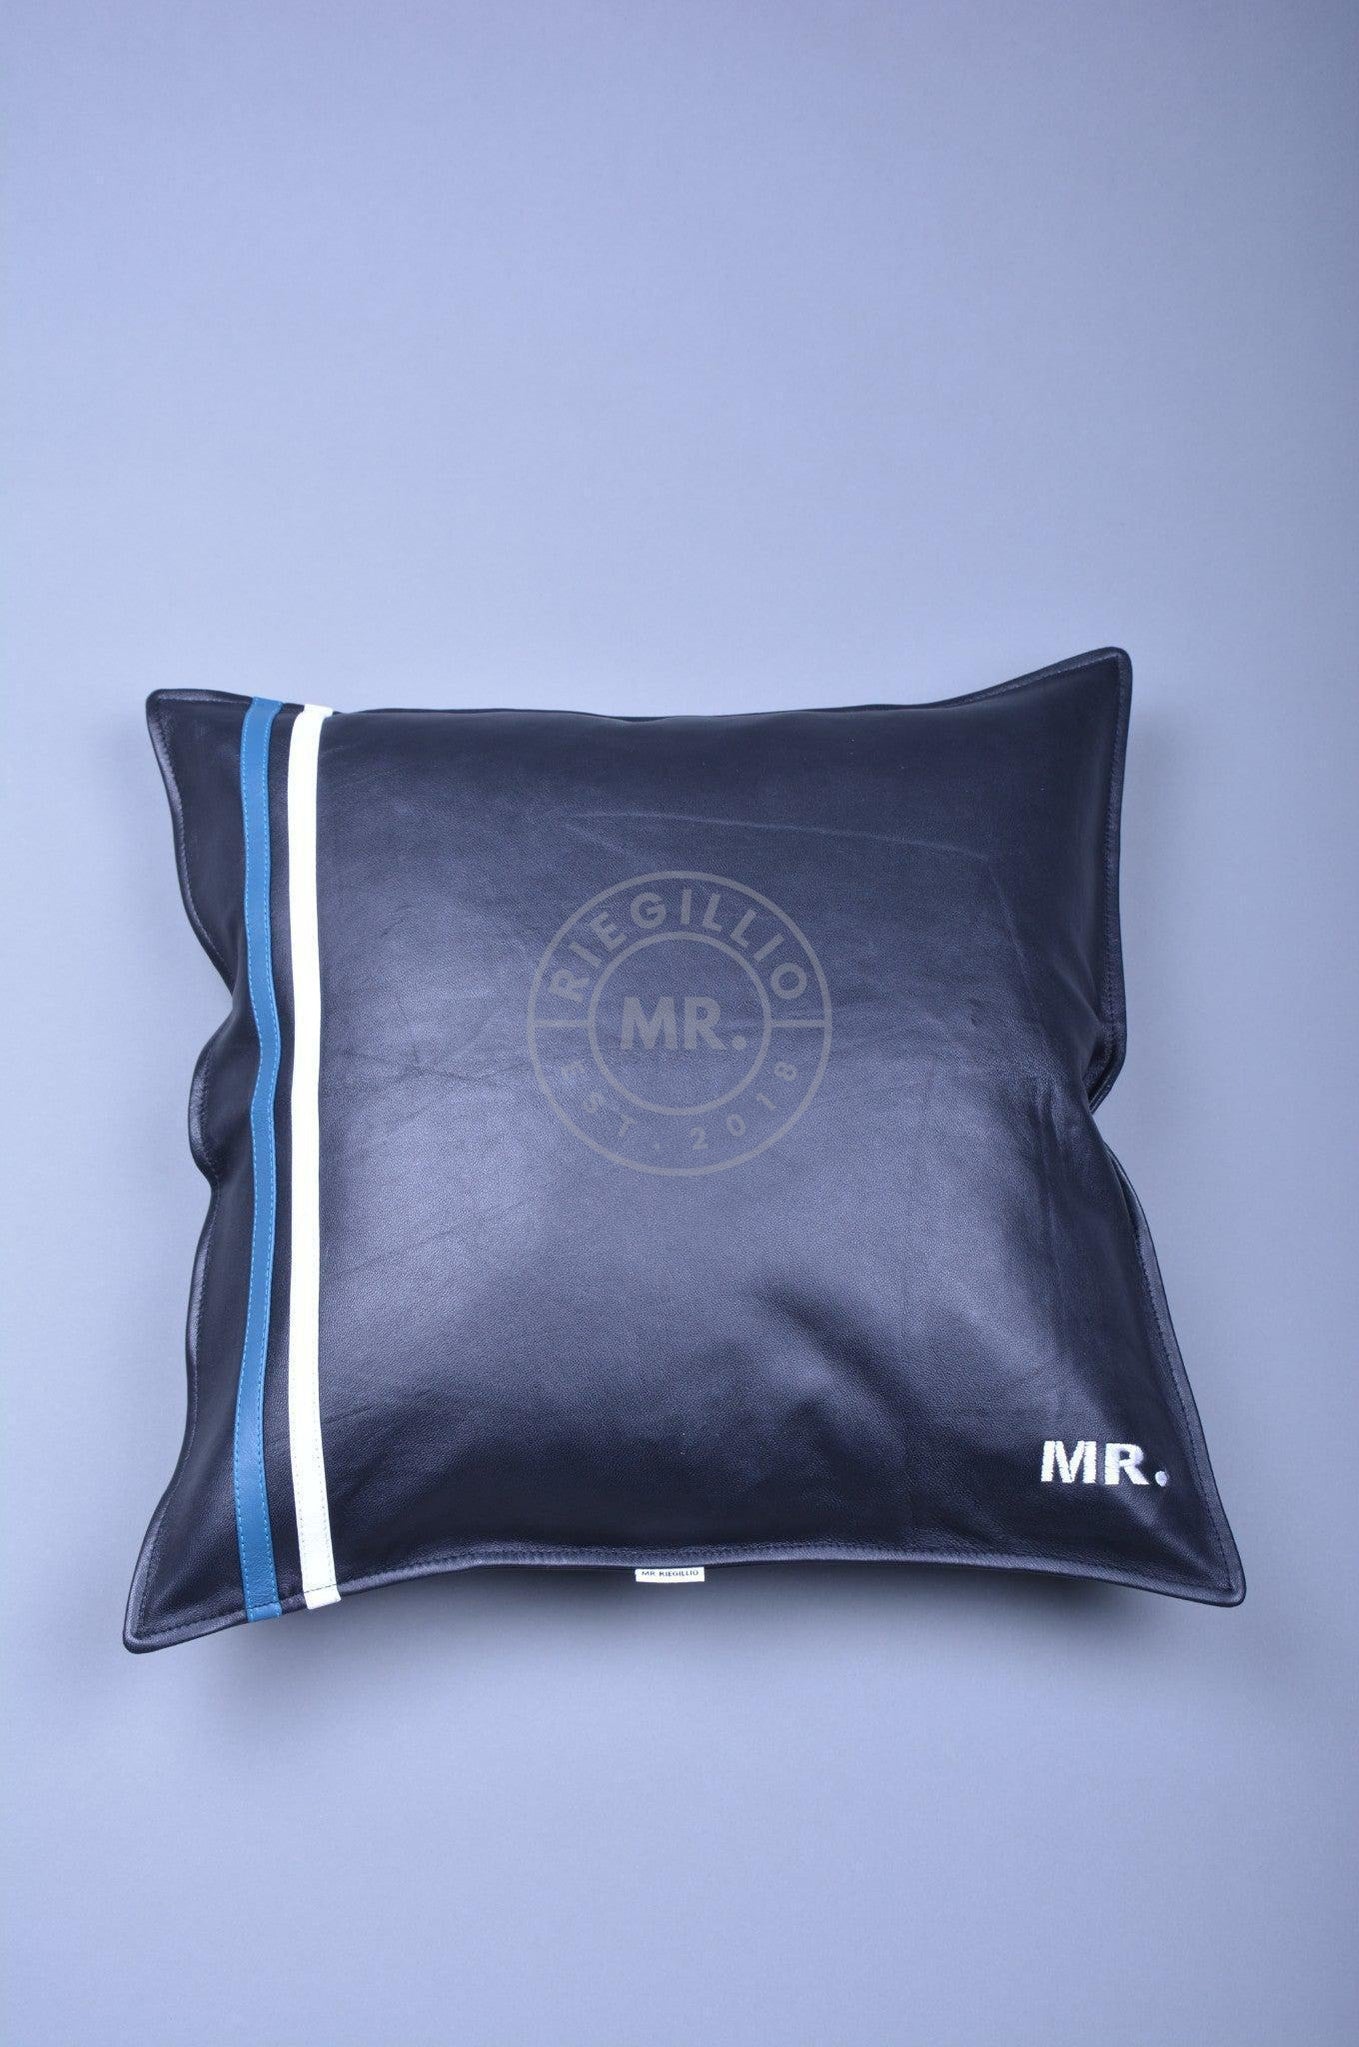 Black Leather Pillow - Jeans Blue Stripe-at MR. Riegillio